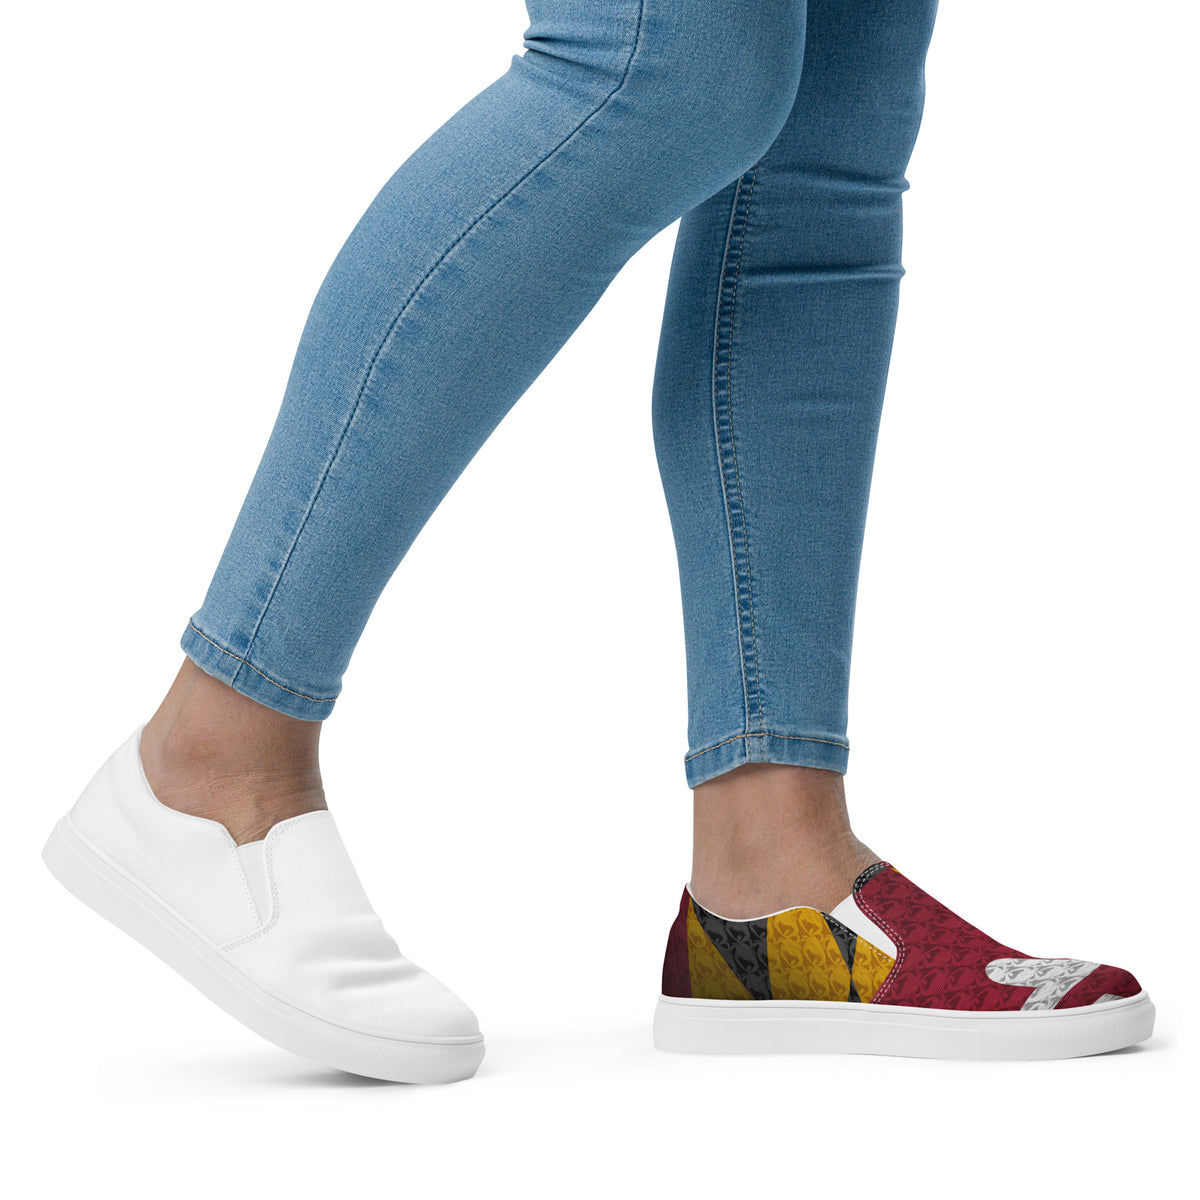 Women’s slip-on canvas shoes - Maryland Flag Design